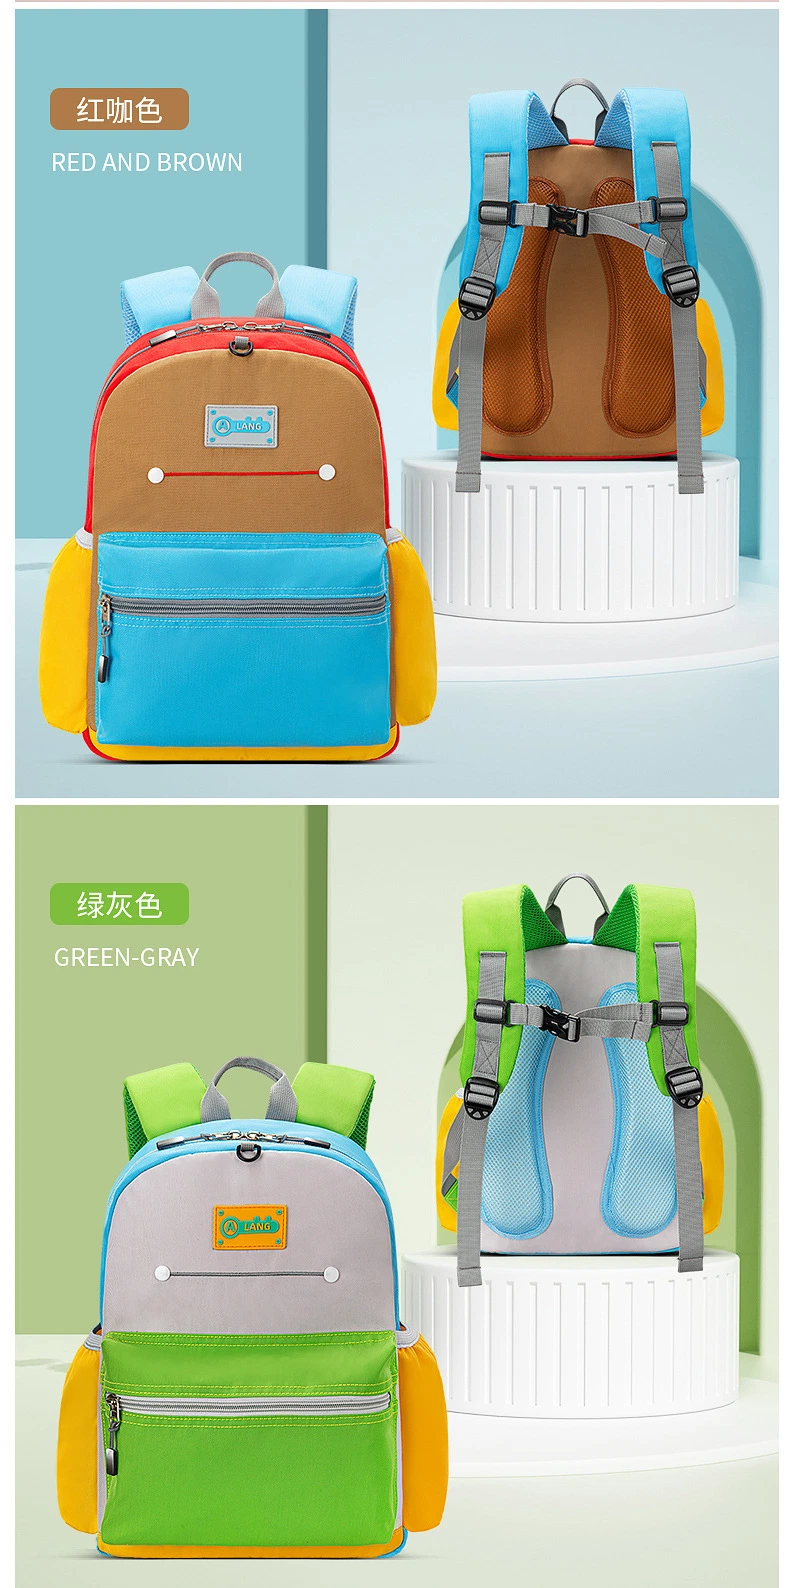 Factory Wholesale Primary School Backpack Leisure Style Kids Bag